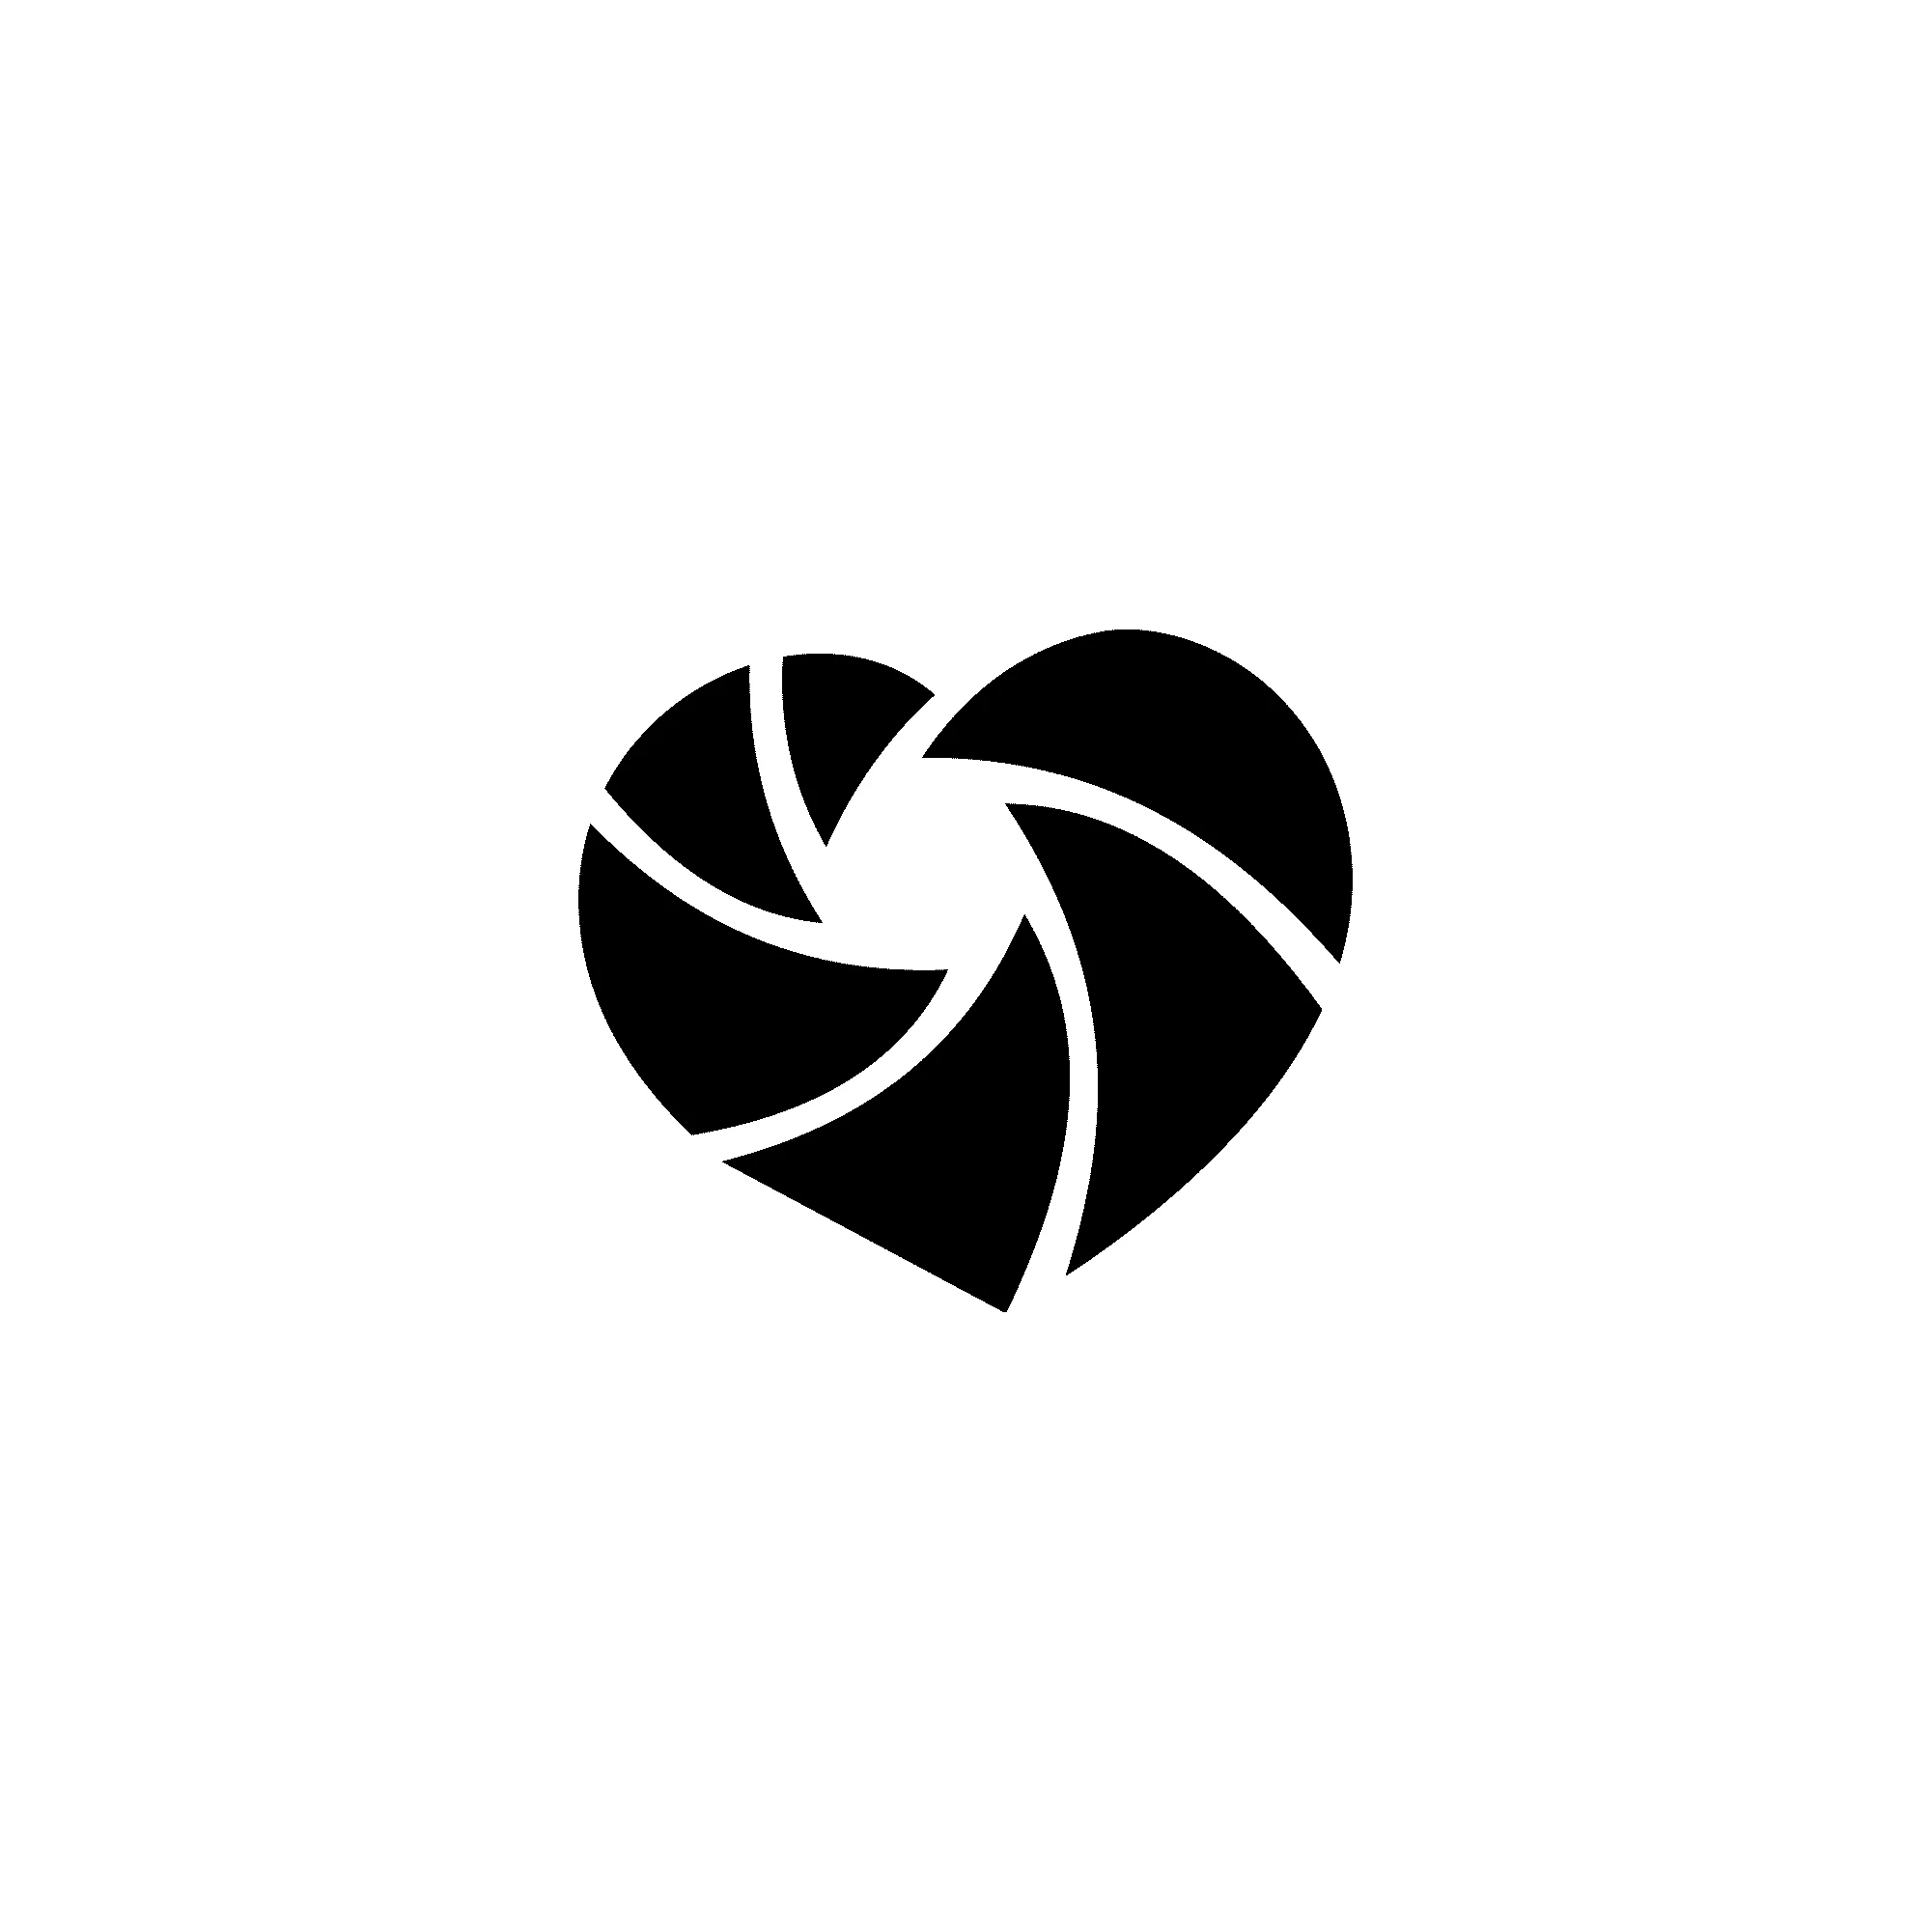 Branding logo design camera shutter in the shape of a heart